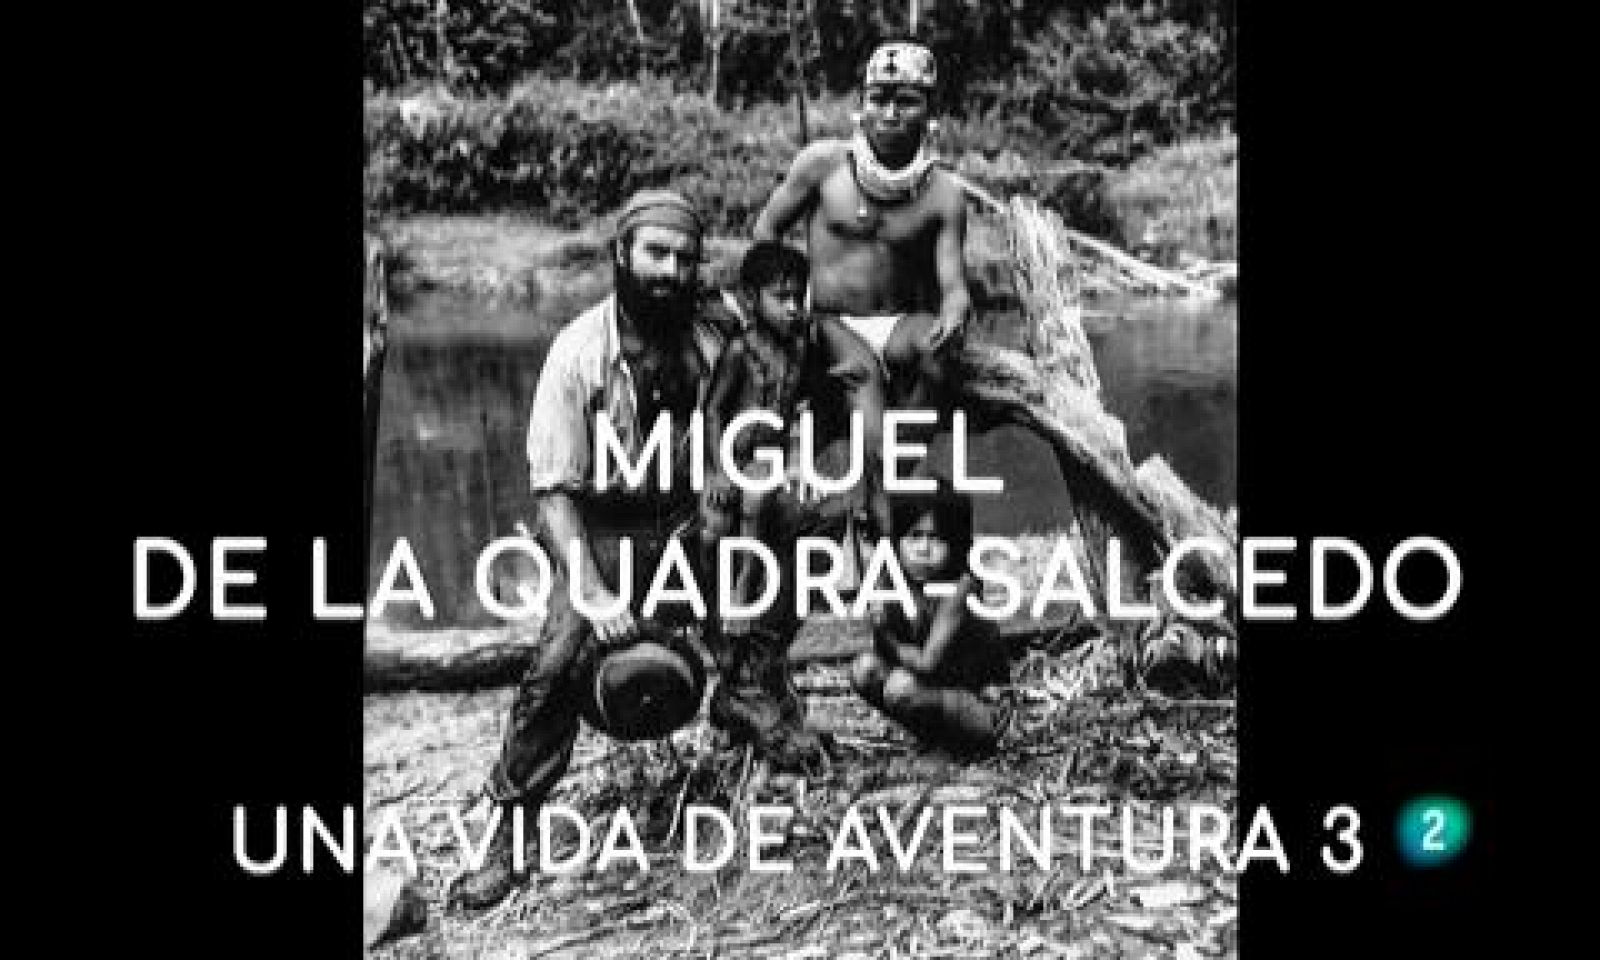 La aventura del saber - Miguel de la Quadra-Salcedo. Una vida de aventura 3